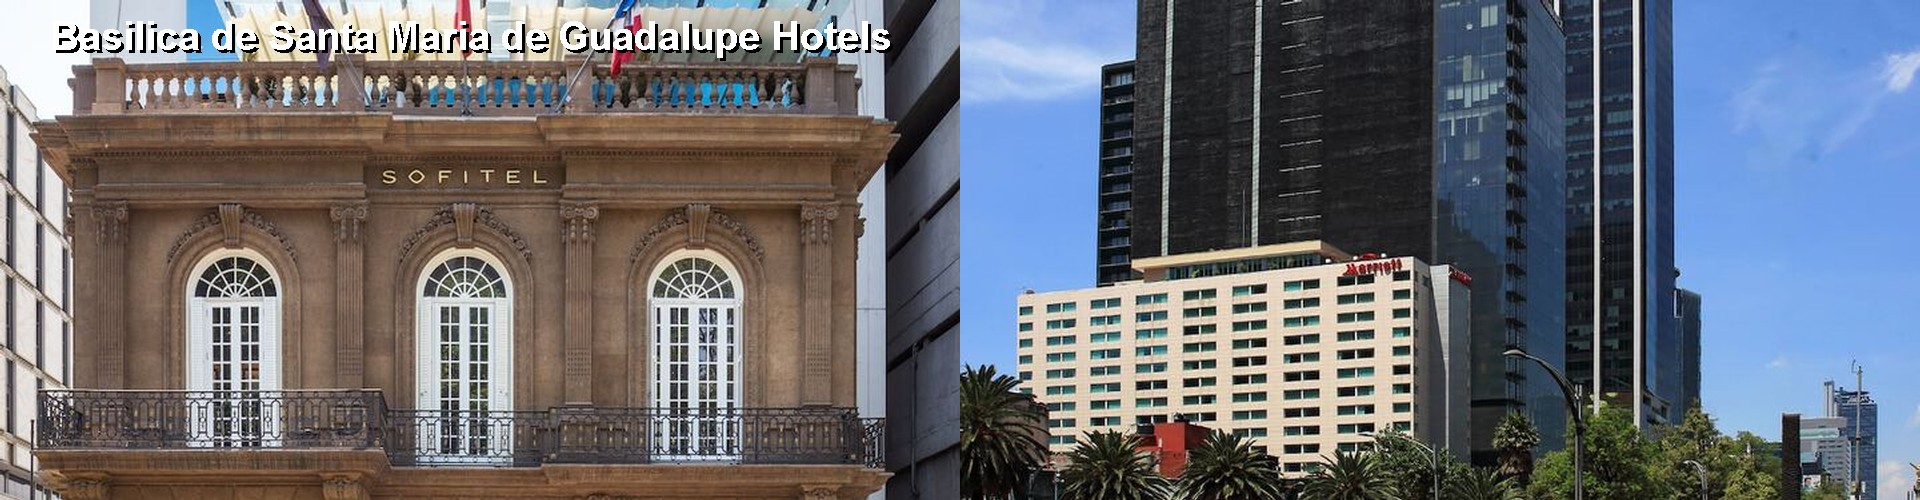 5 Best Hotels near Basilica de Santa Maria de Guadalupe